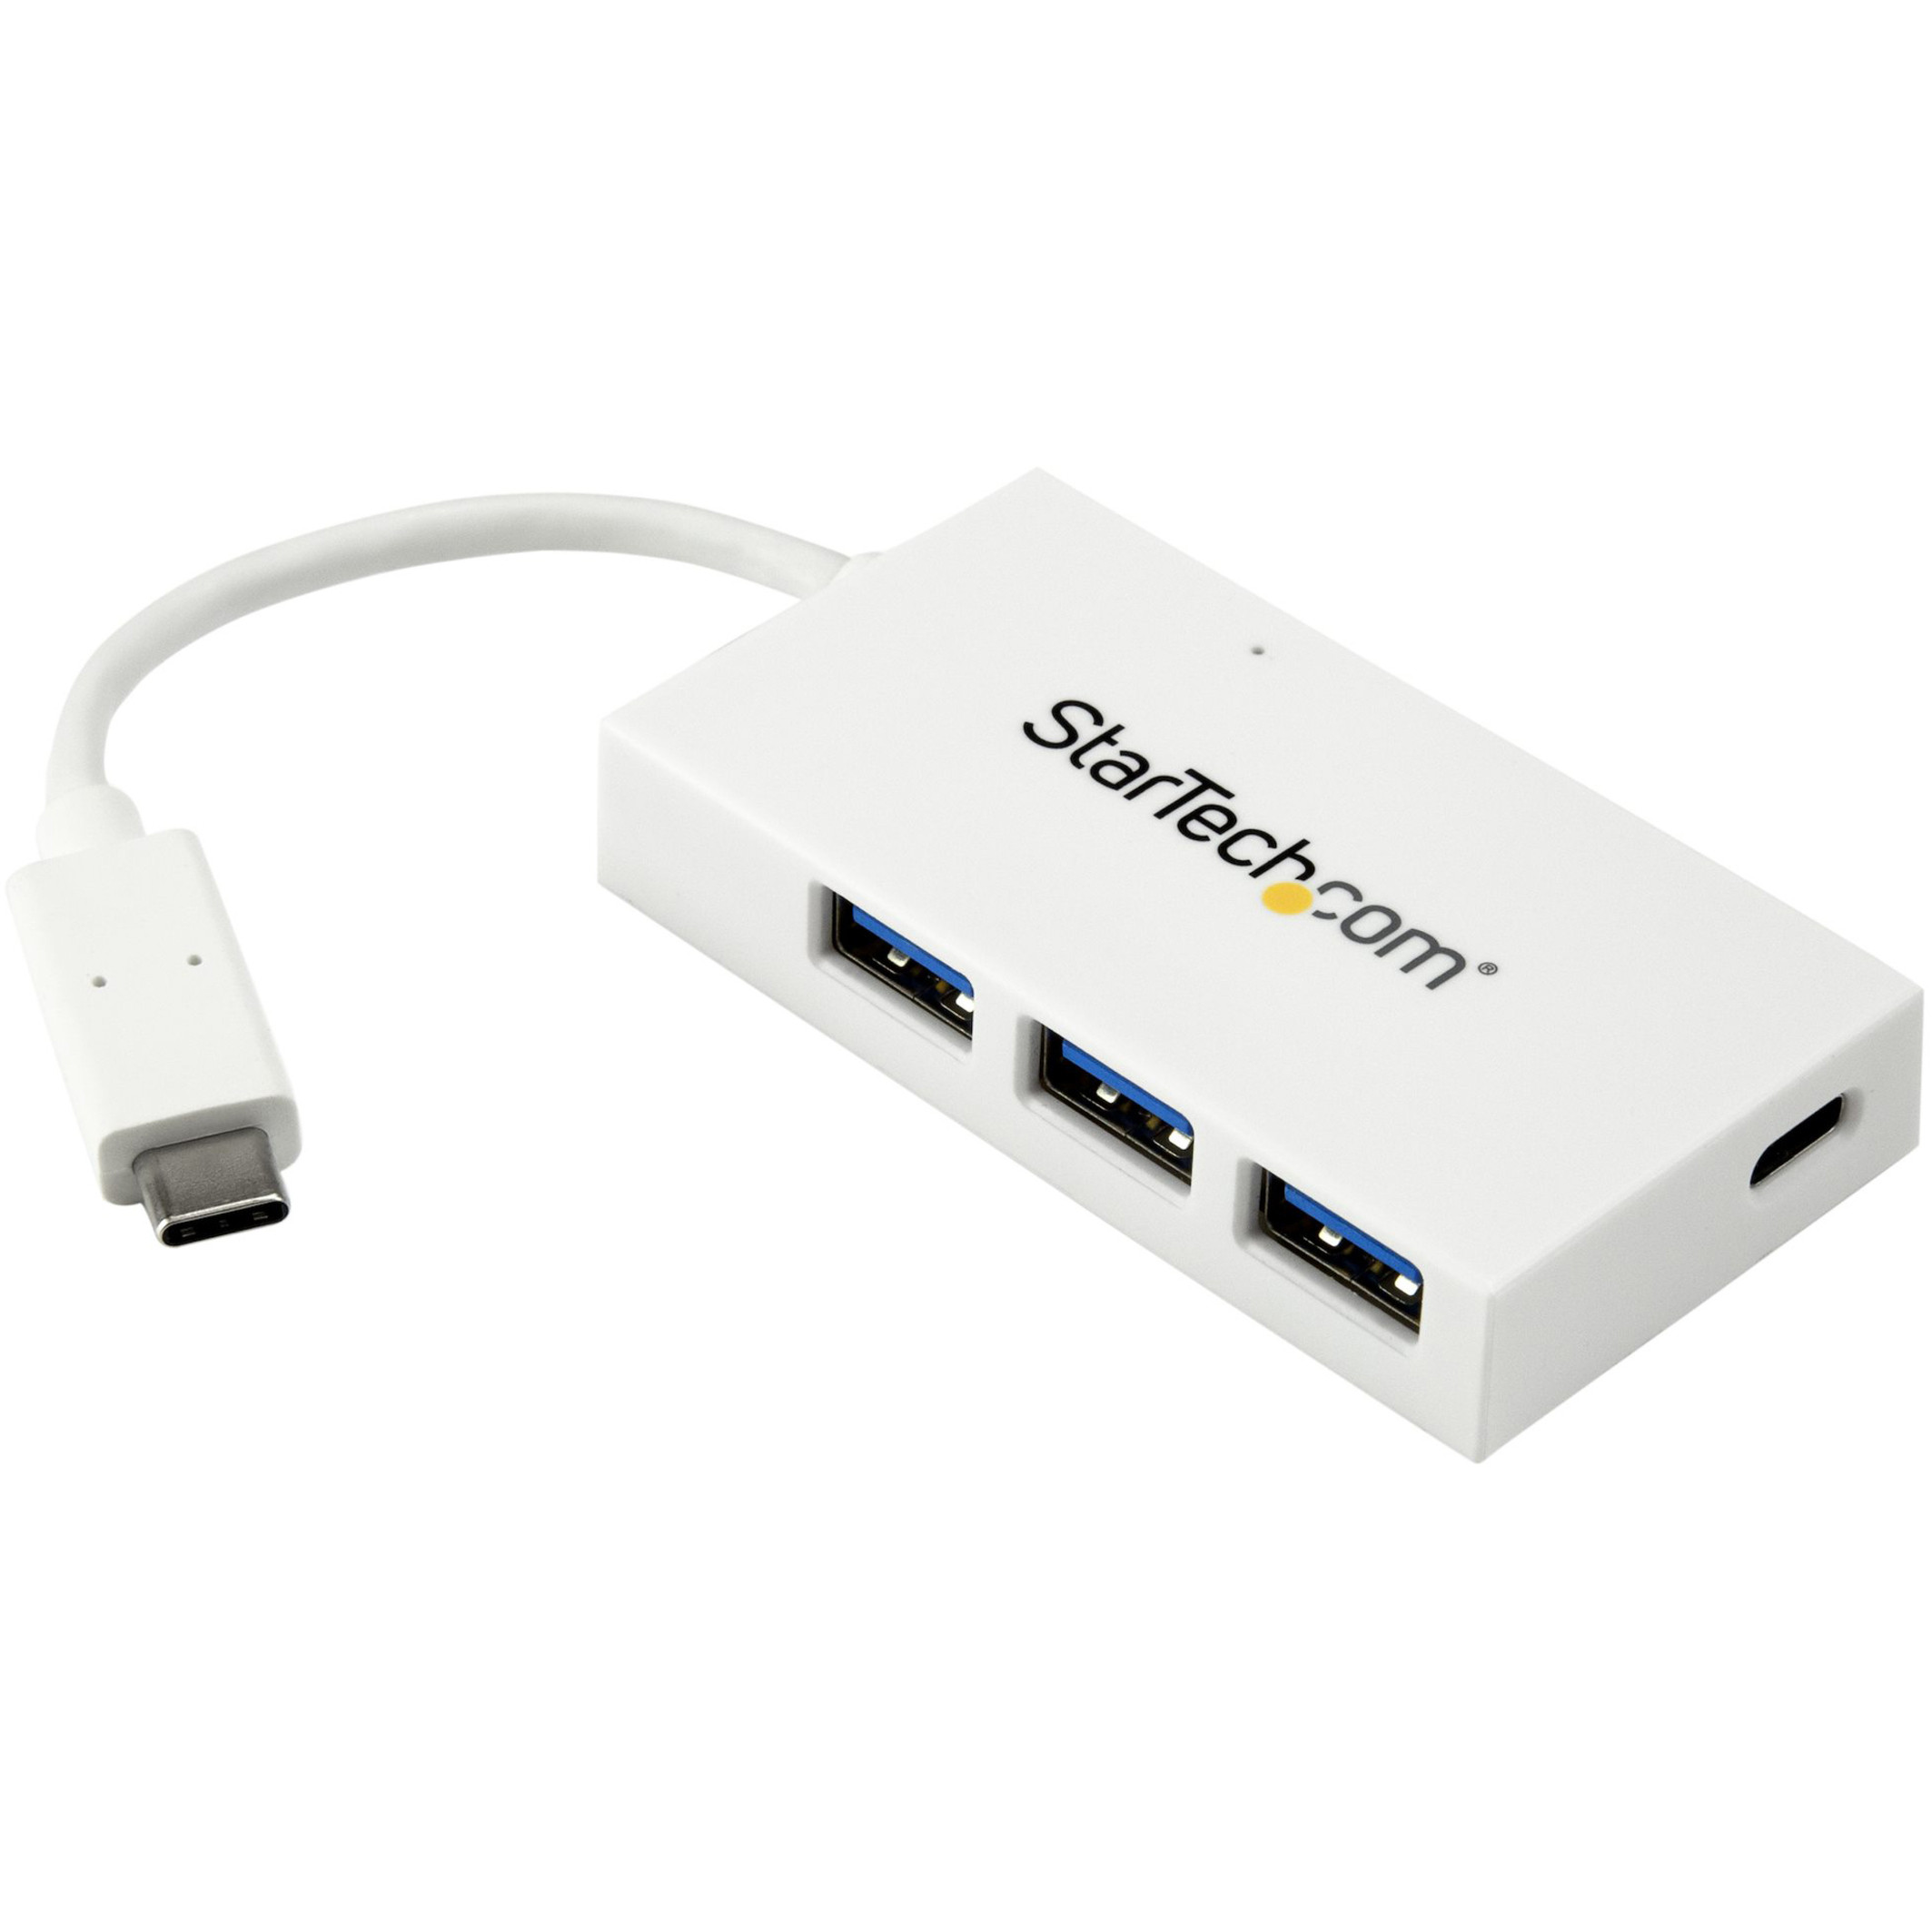 Startech .com 4 Port USB C Hub with 1x USB-C & 3x USB-A (SuperSpeed 5Gbps)USB Bus PoweredPortable/Laptop USB 3.0 Type-C HubWhite -… HB30C3A1CFBW